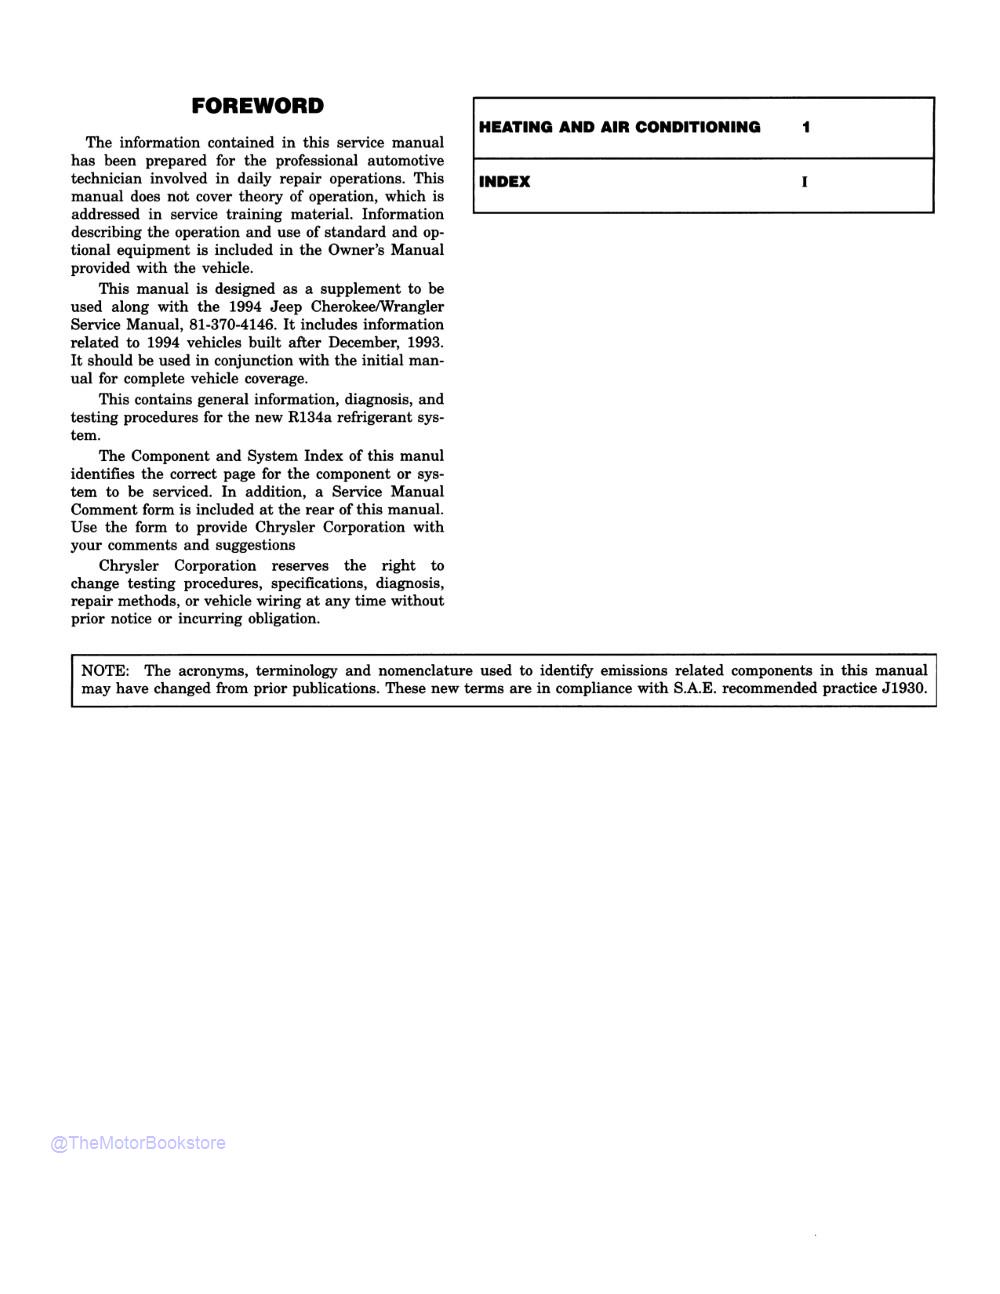 1994 Jeep Cherokee & Wrangler Shop Manual - Sample Page 1